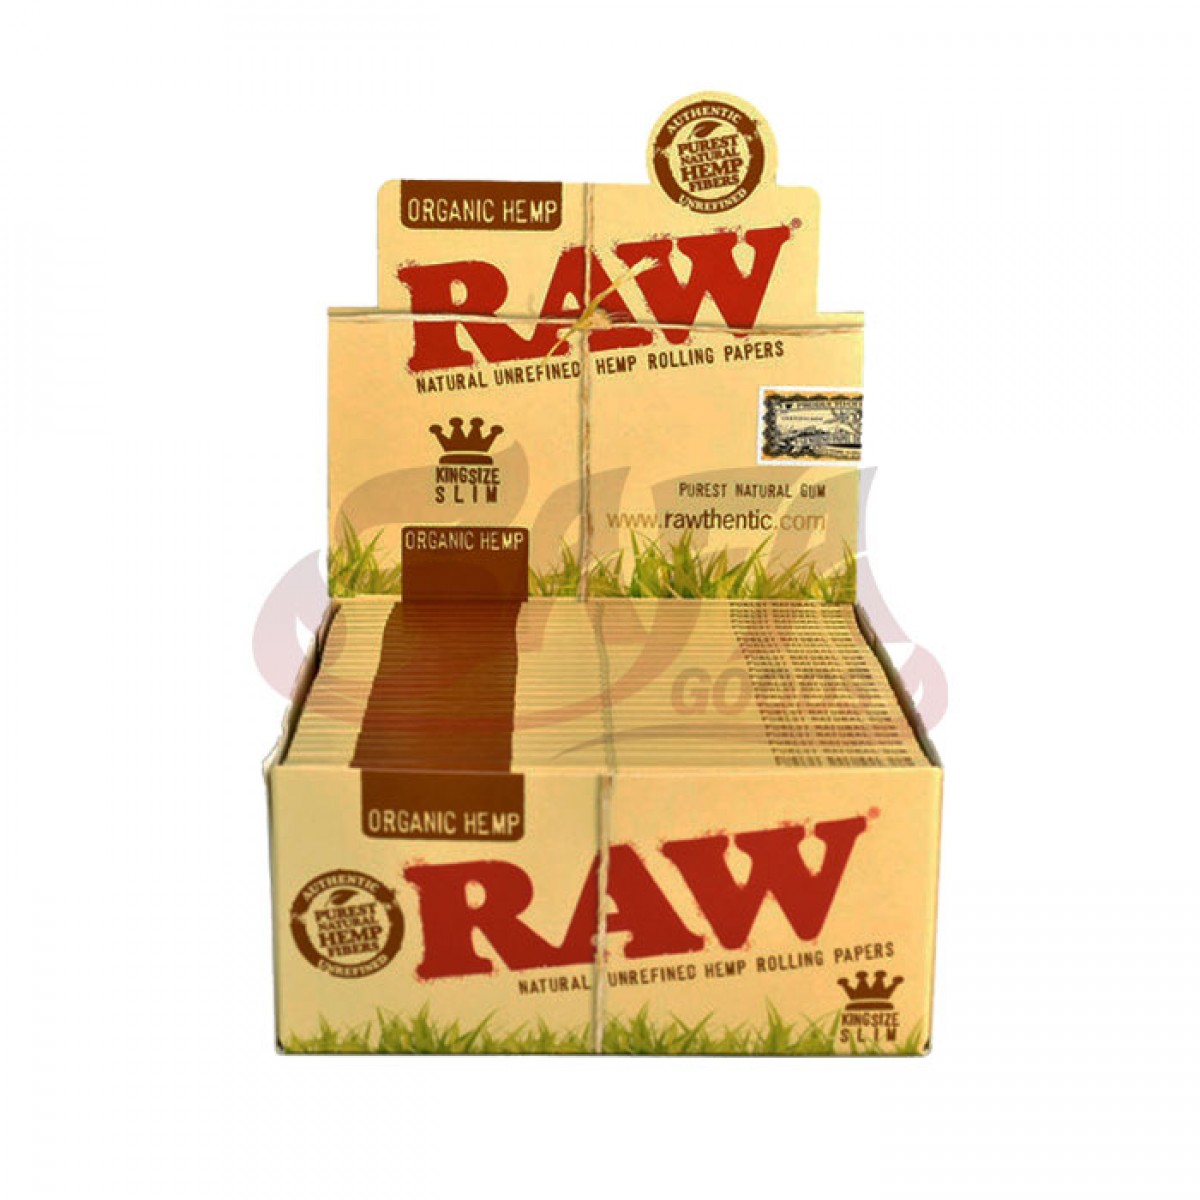 Raw Organic (King Size Slim) Hemp Rolling Papers - 50PC Box